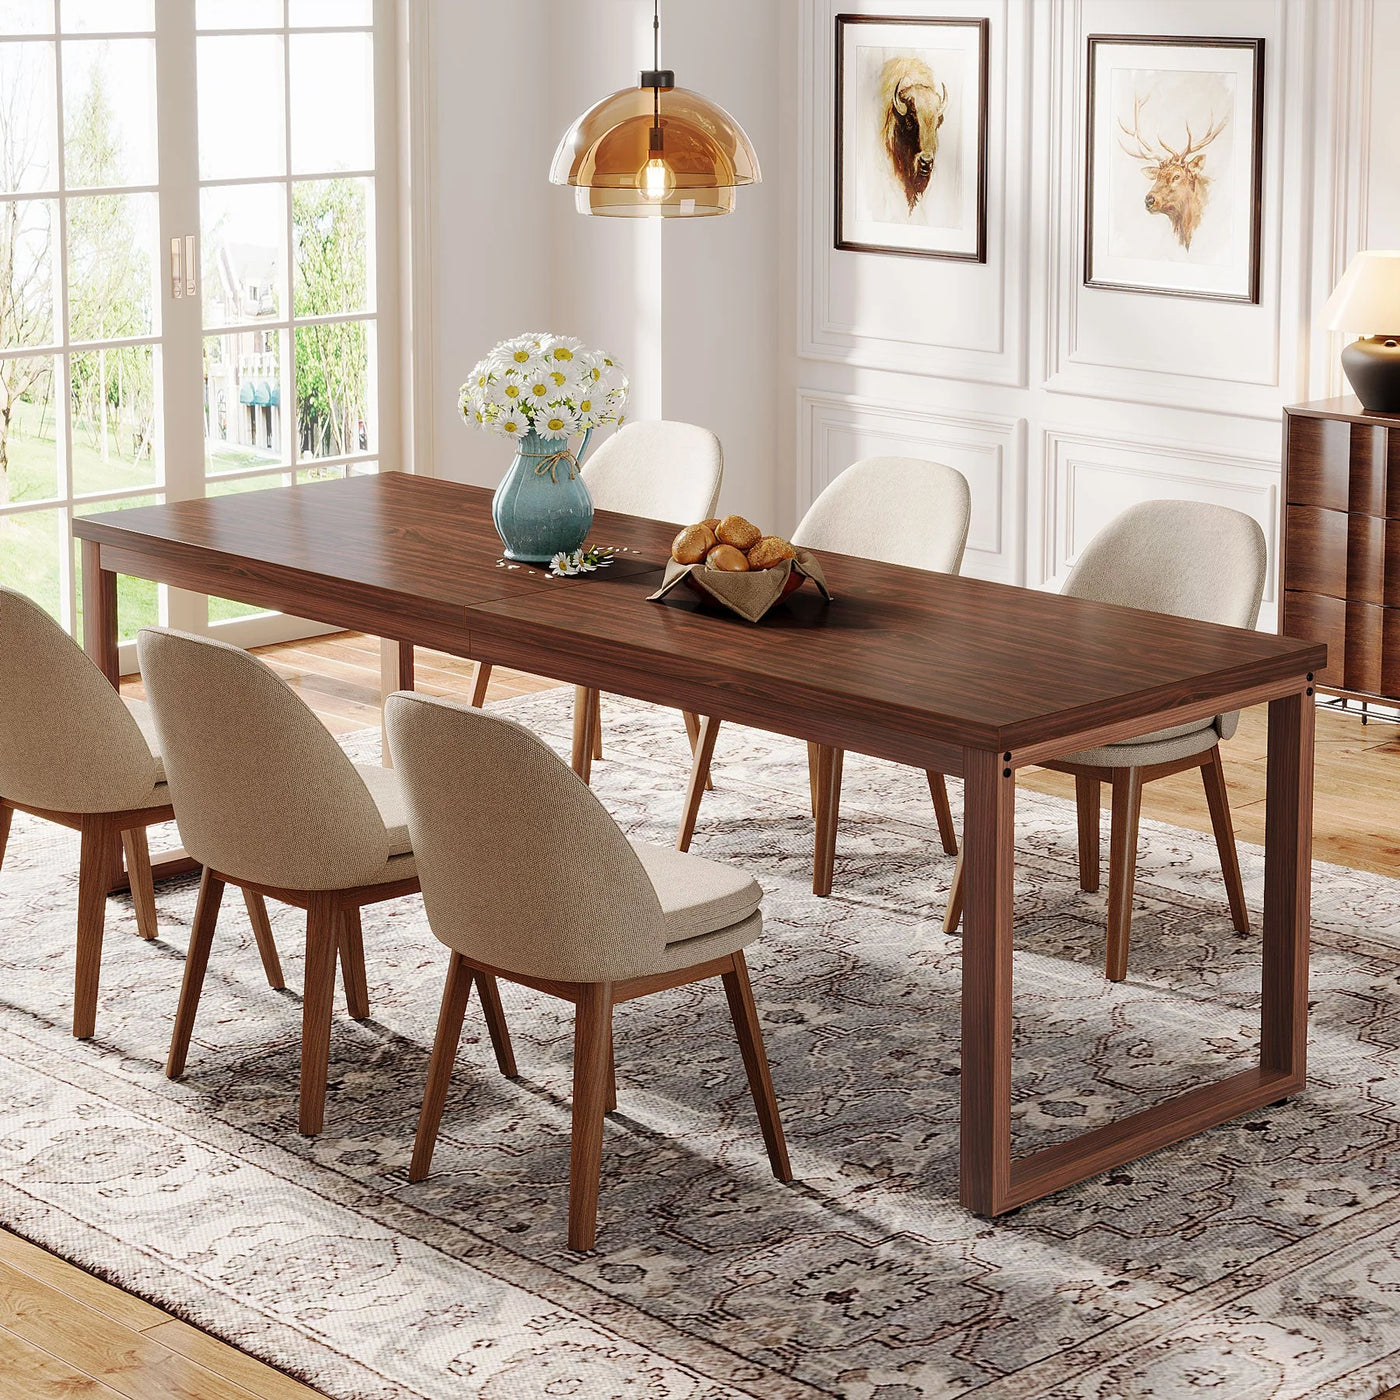 Reina Wooden Dining Table | Modern Rectangular Kitchen Table for 6-8